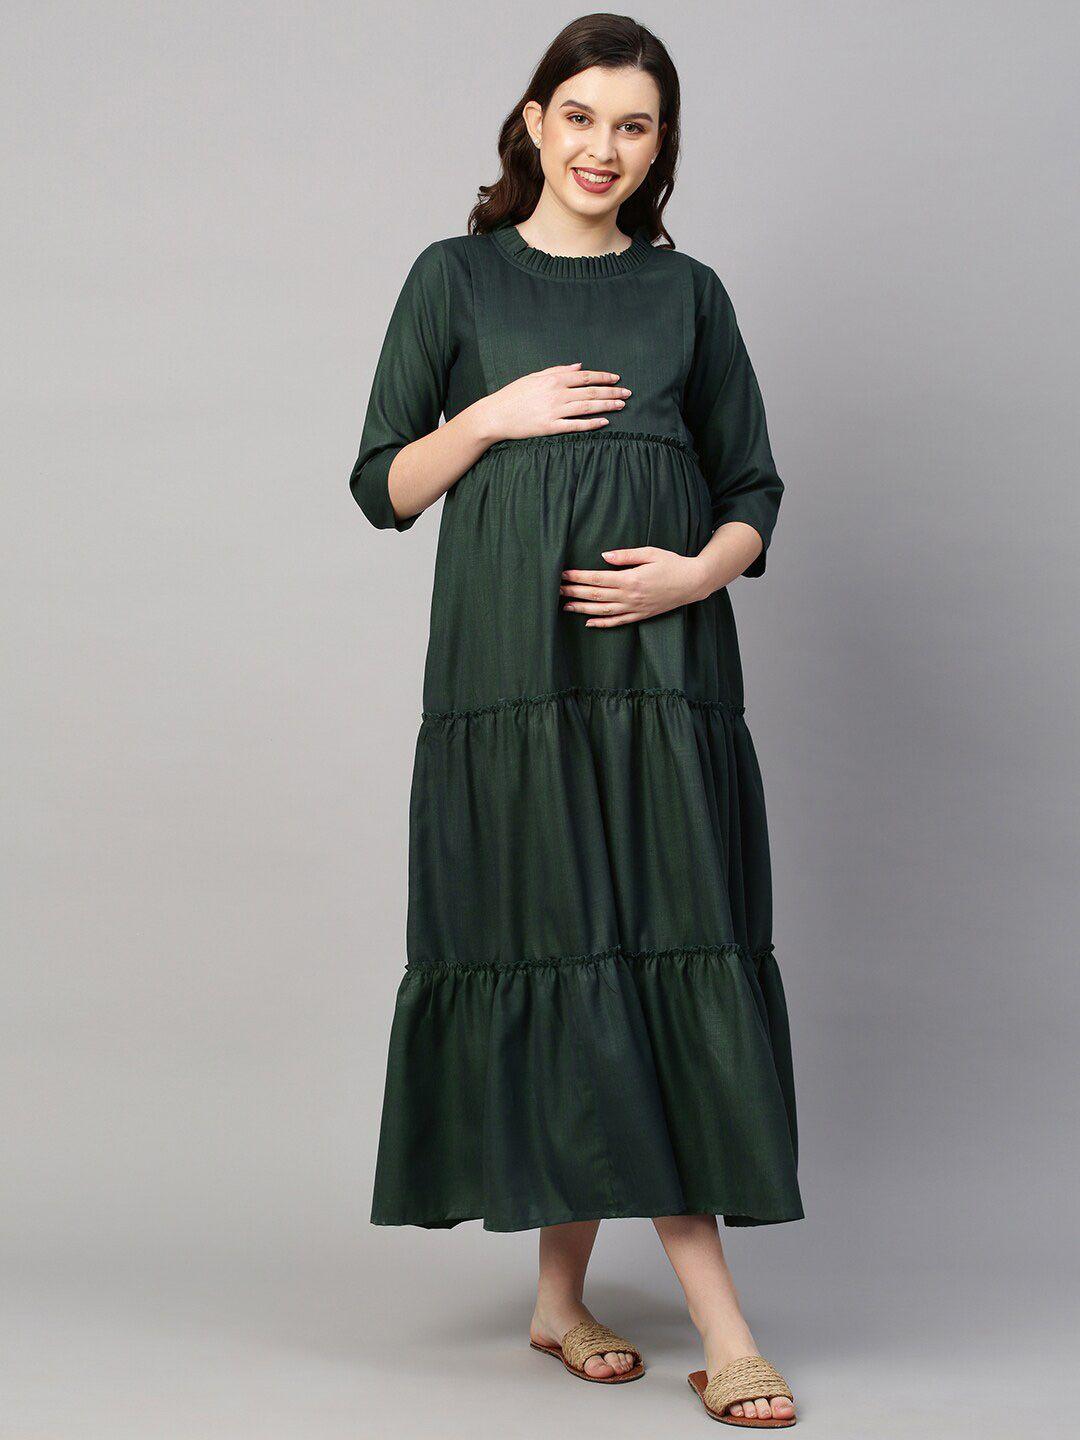 momtobe green maternity nursing empire maxi dress